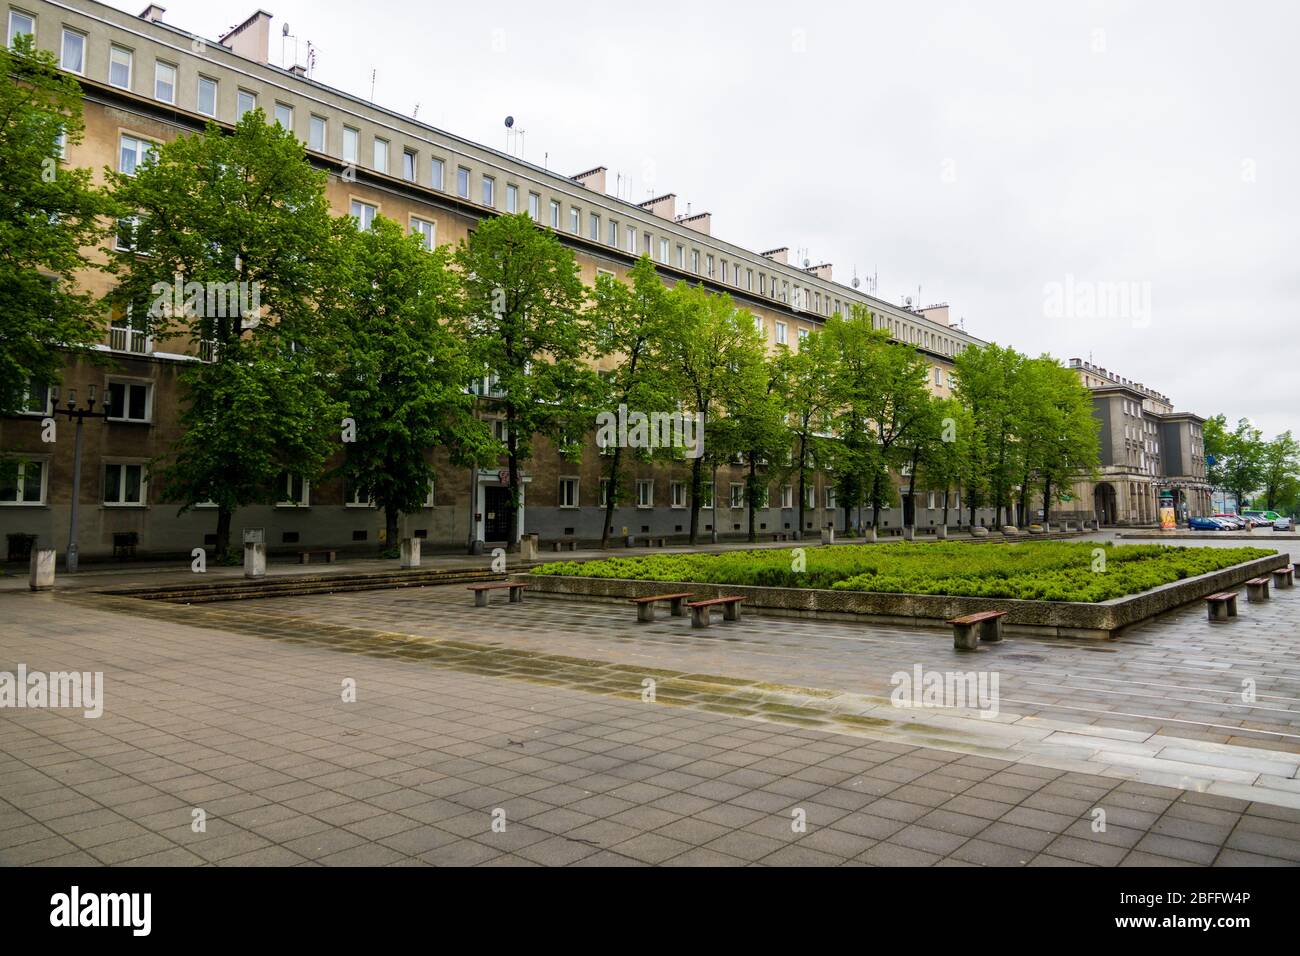 Nowa Huta Communist Neighborhood Apartments Stalin Post World War II Krakow Poland Europe EU Stock Photo